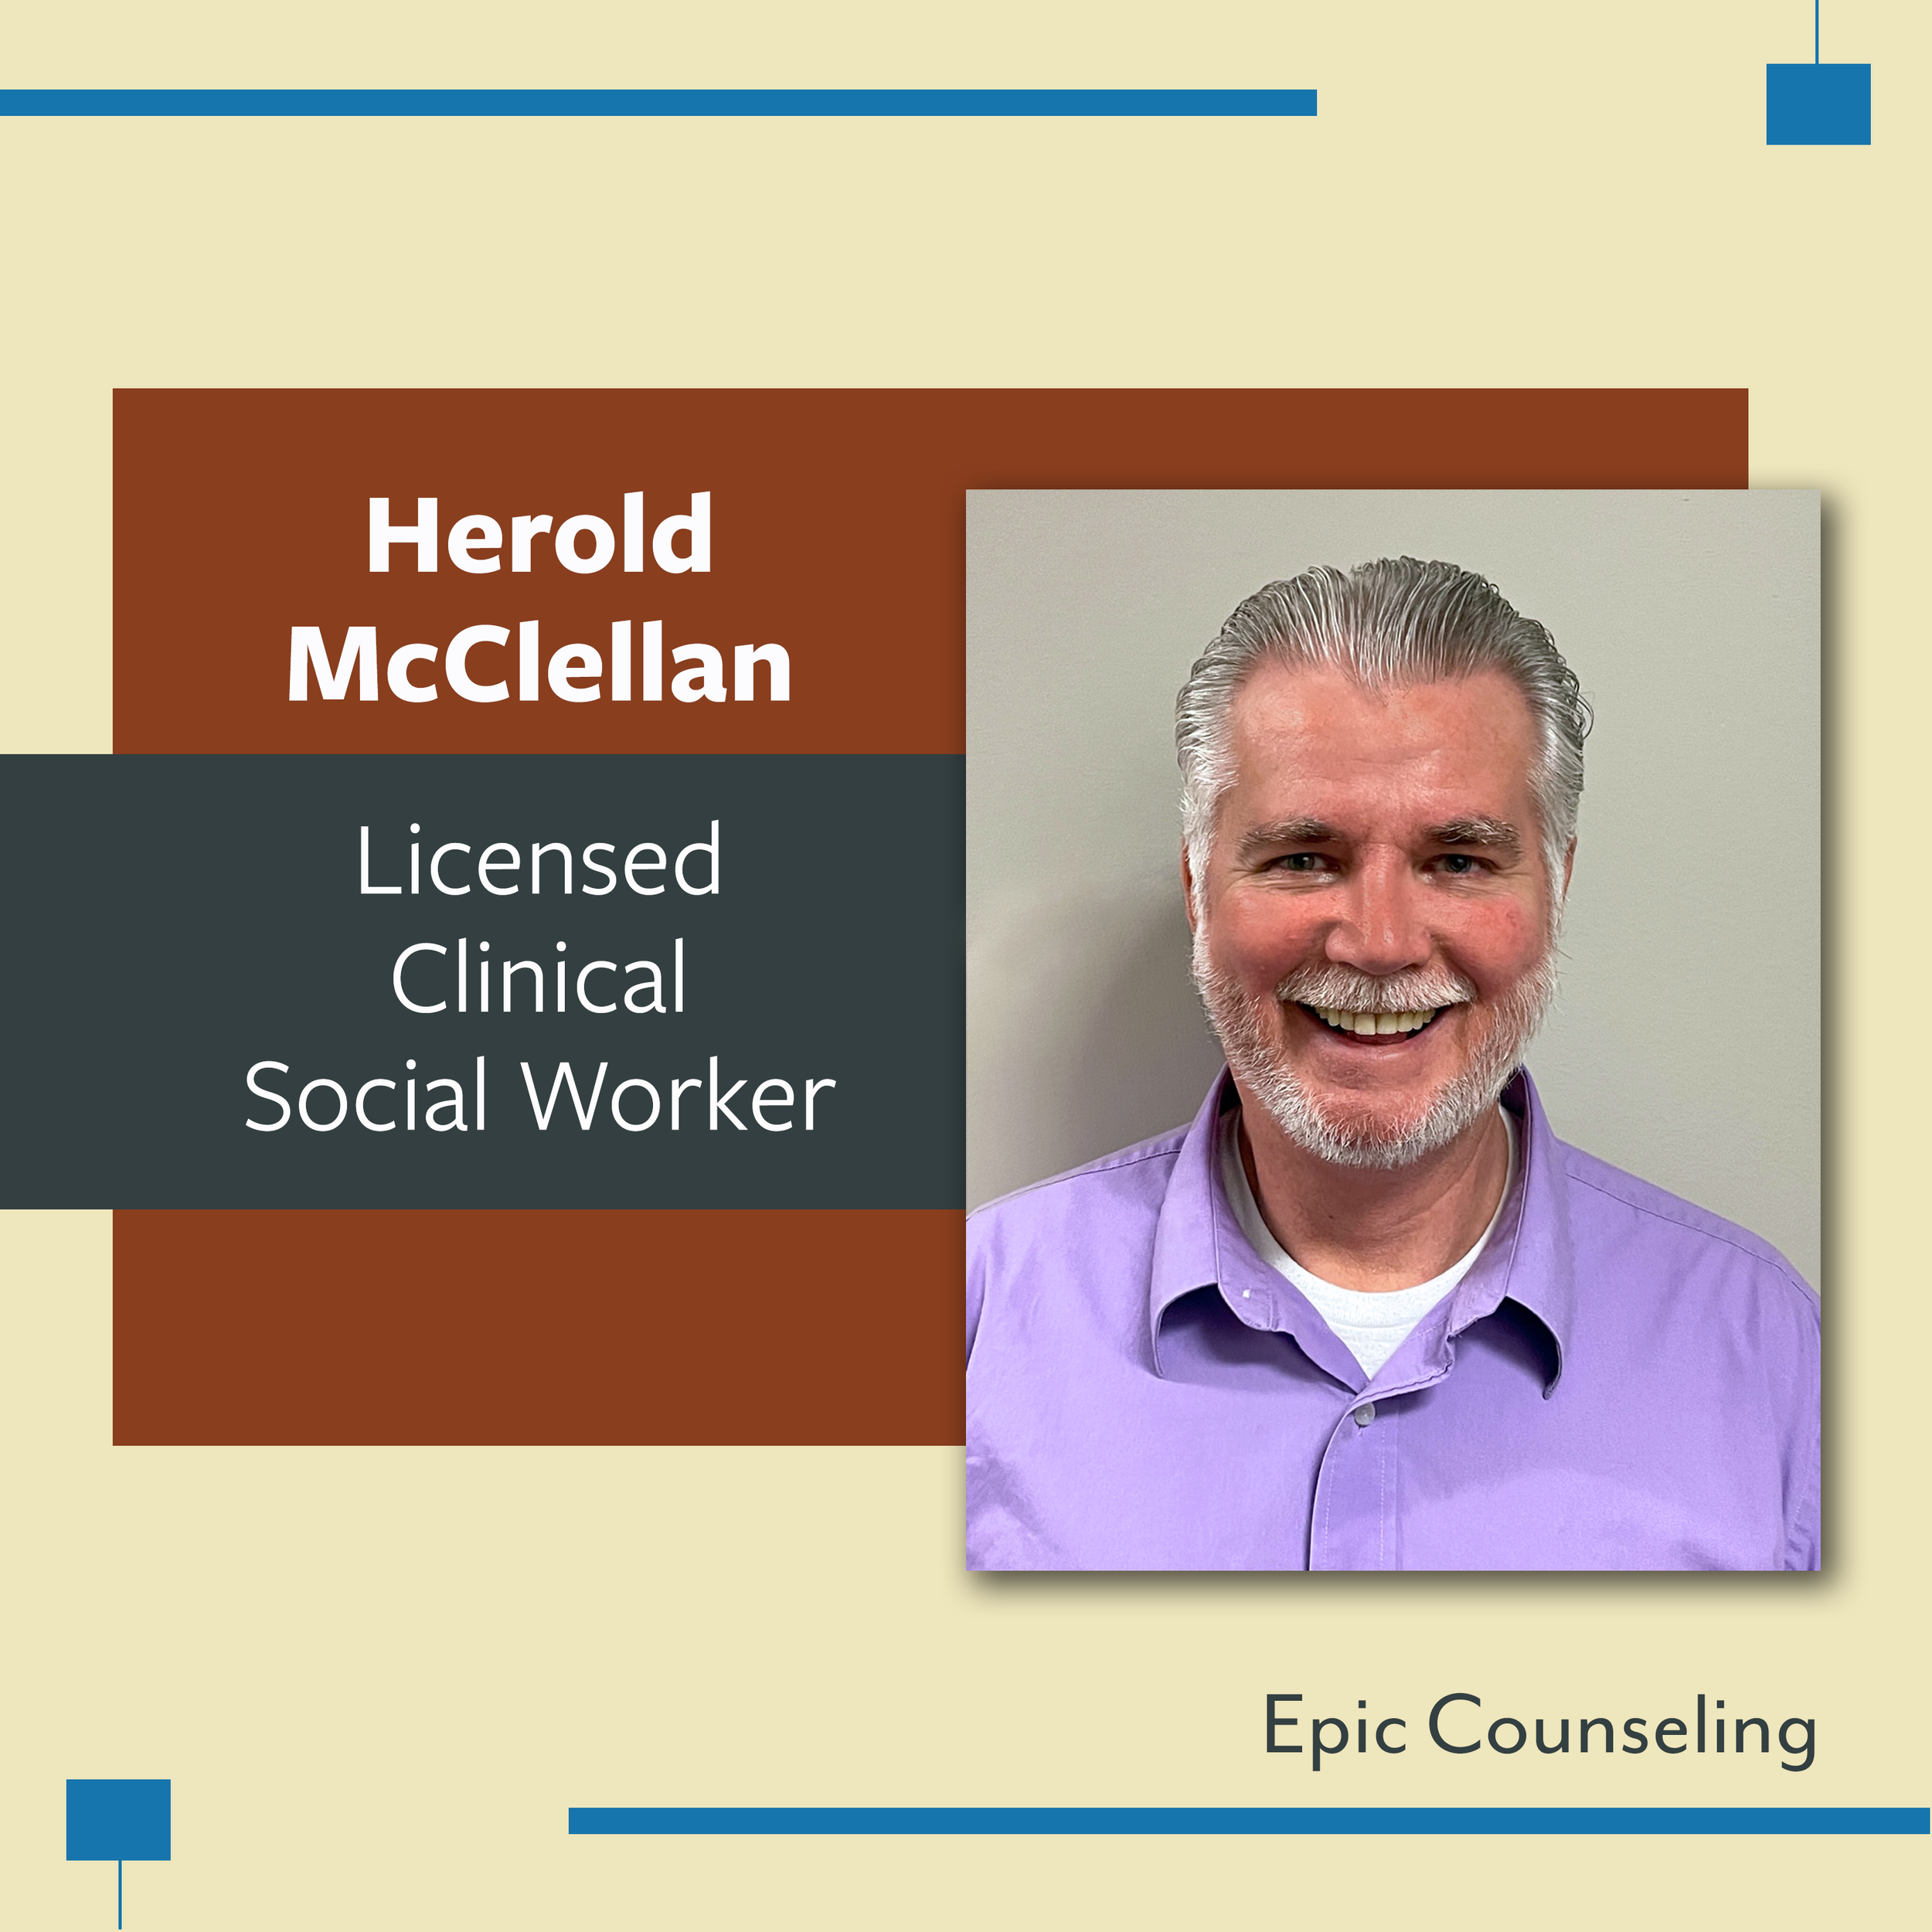 Herold McClellan, Diakonos Counseling Kansas City